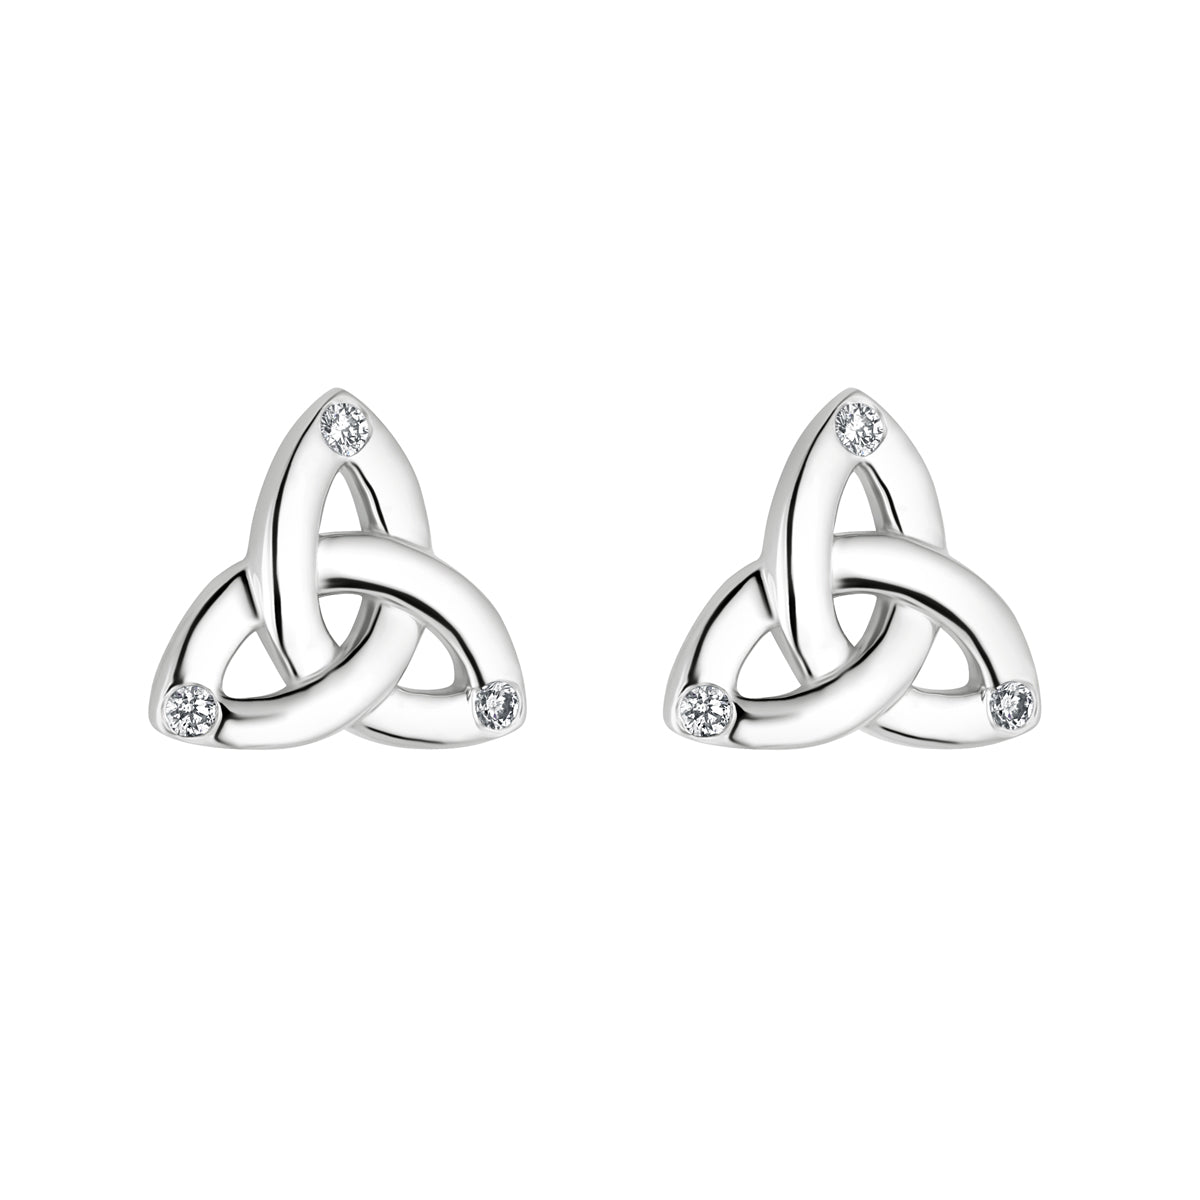 White Gold Flush Set Diamond Trinity Knot Earrings S34195 from Solvar Irish Jewellery